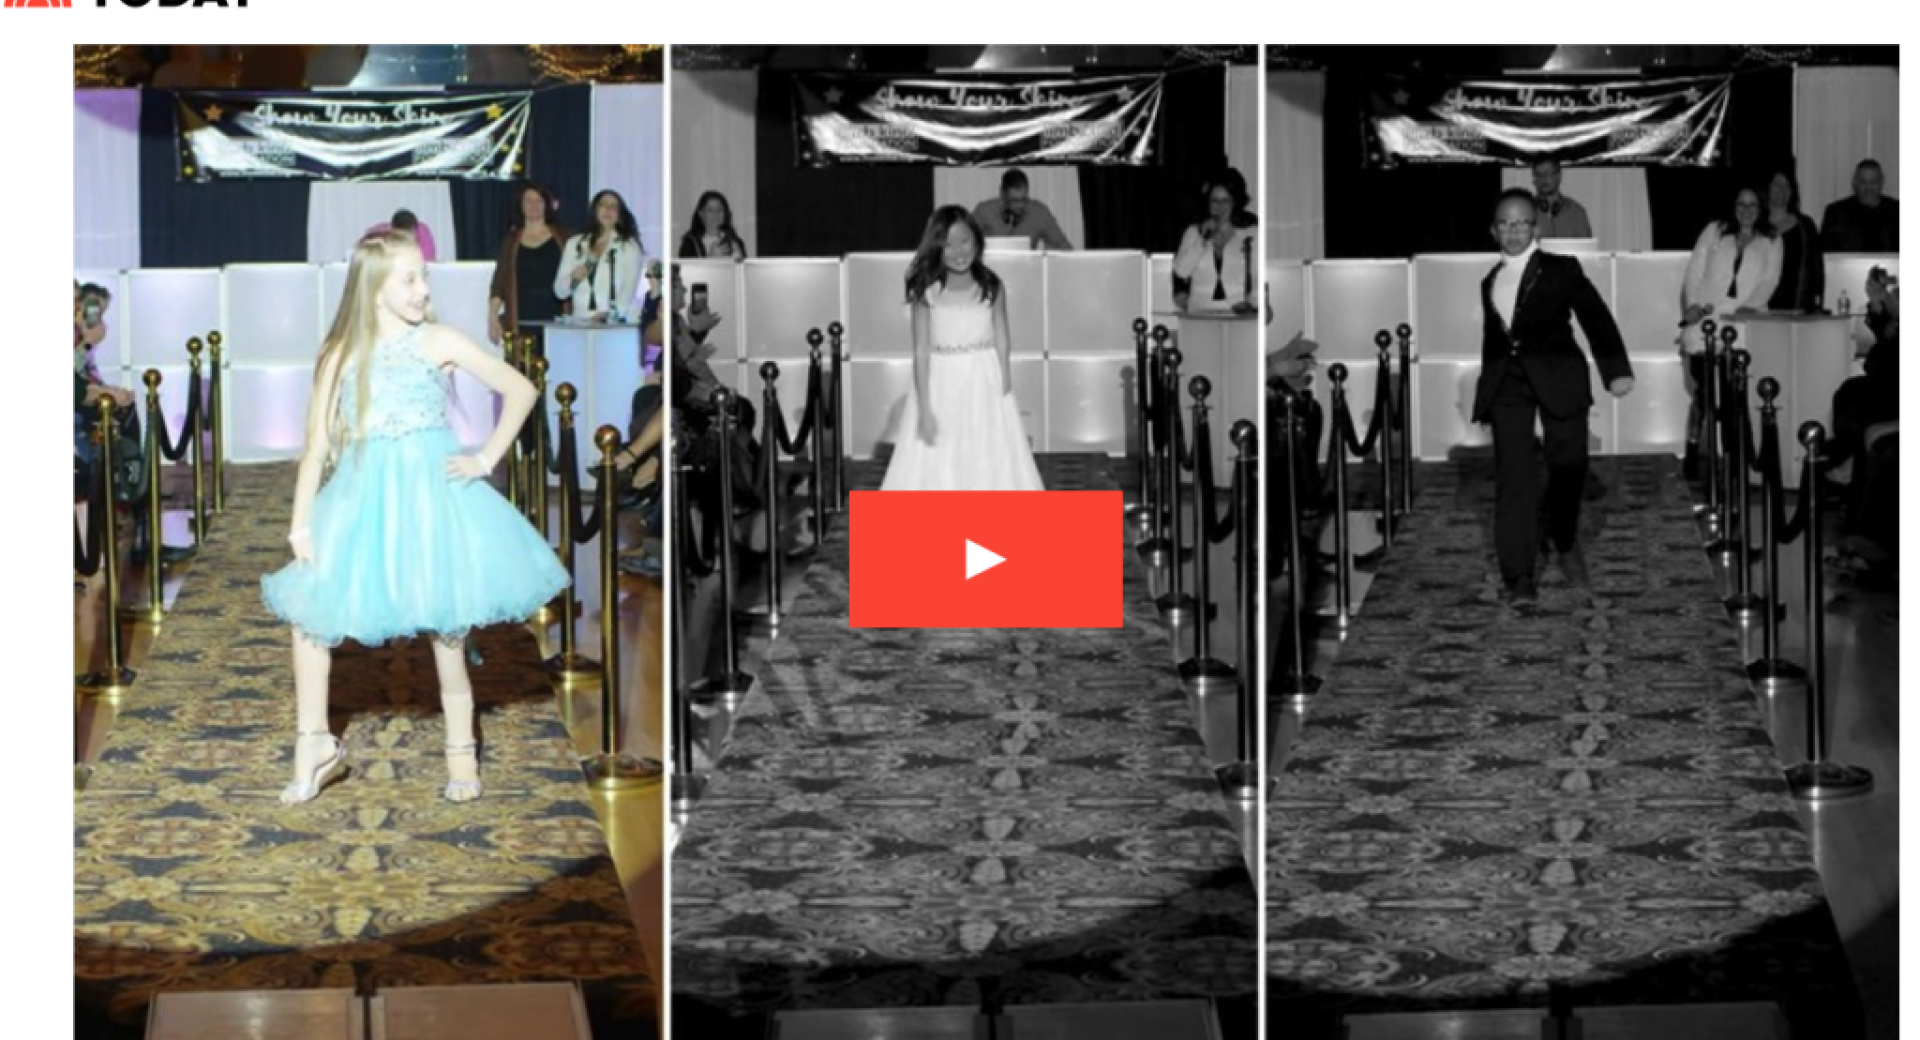 25 kids with limb loss shine in inspiring fashion show